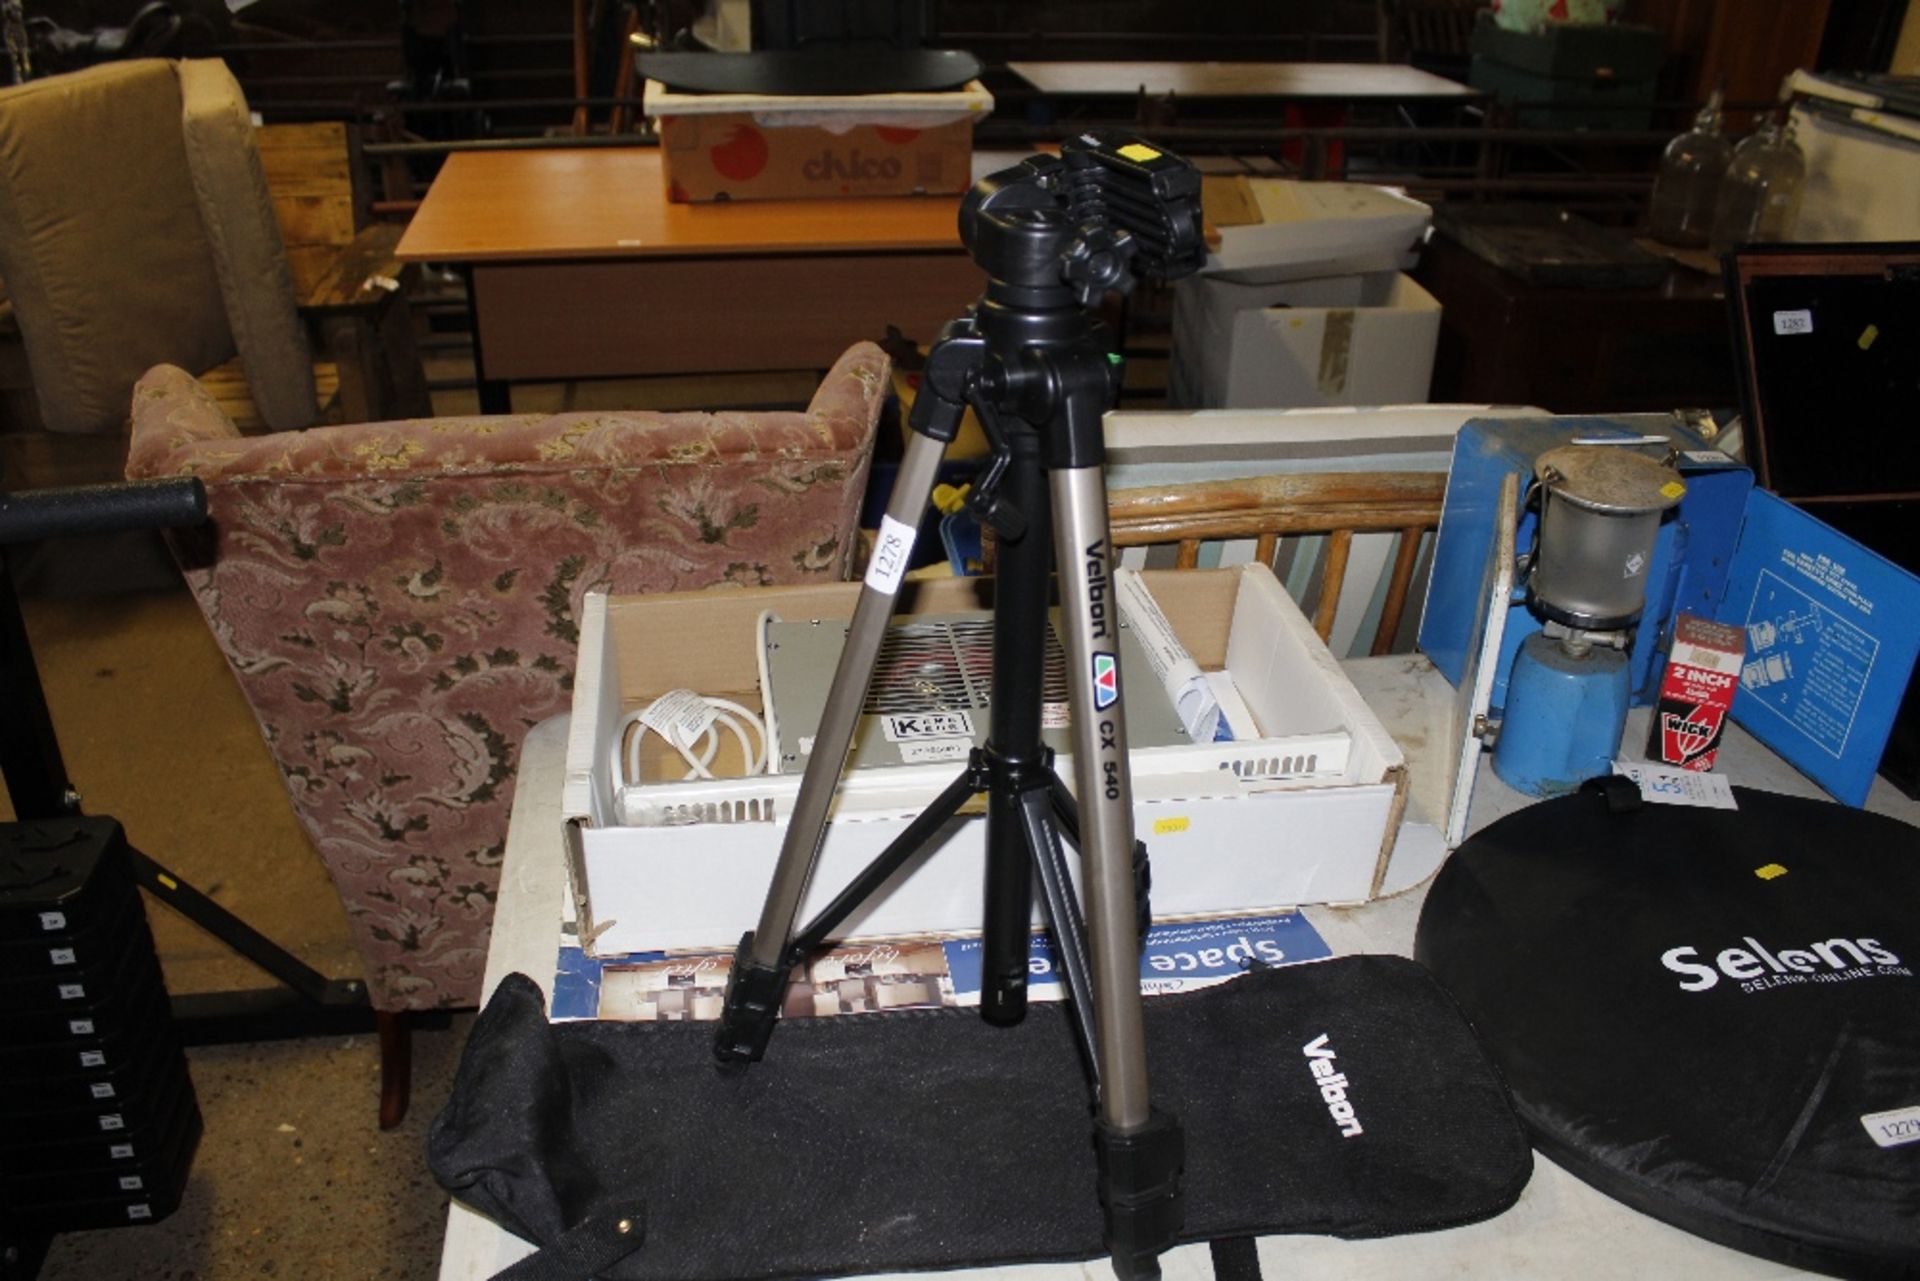 A Velbon camera tripod and bag